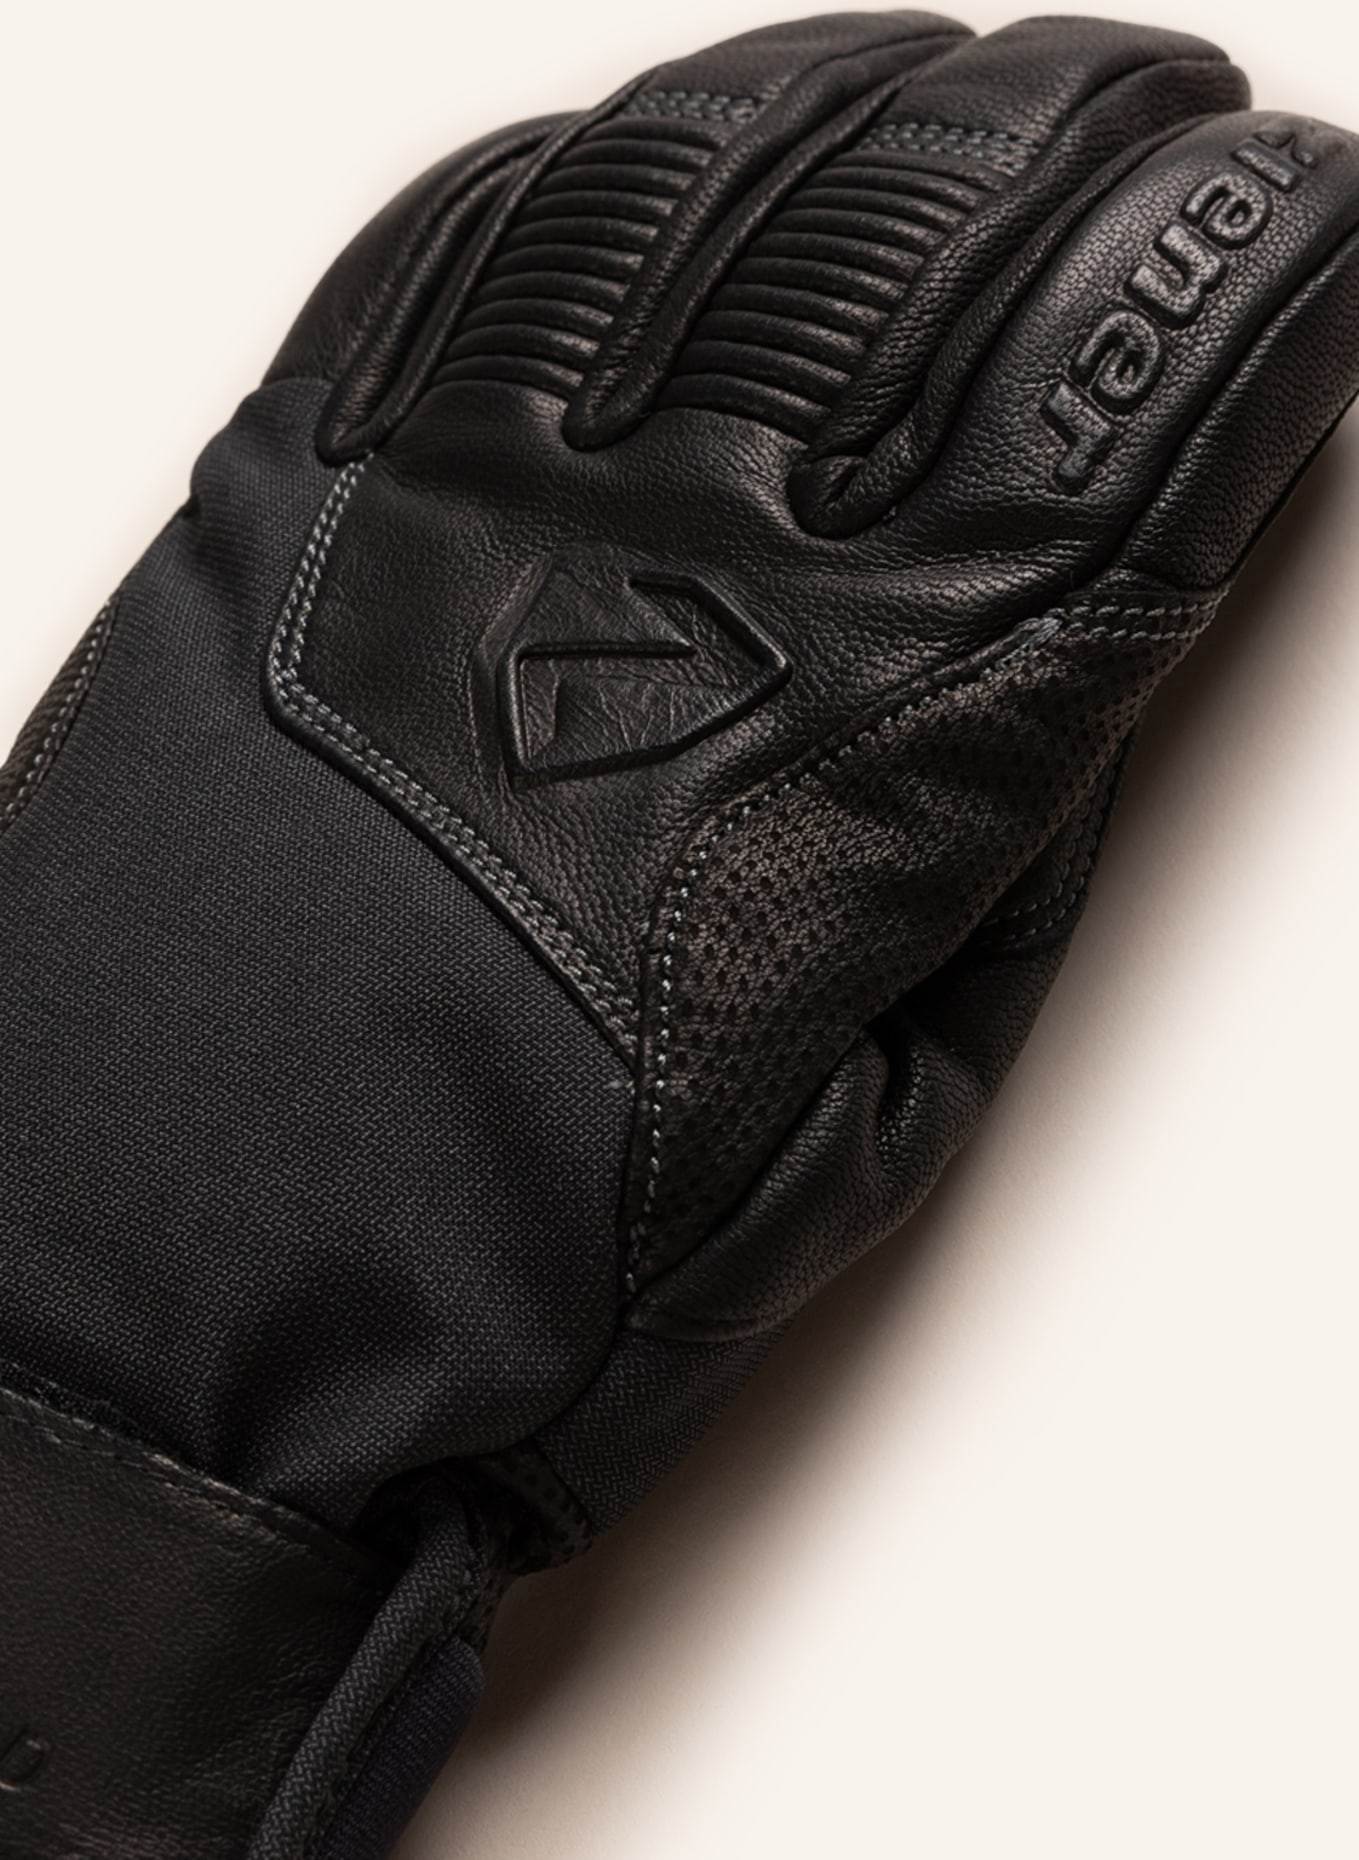 ziener Ski gloves in black/ GANZENBERG gray dark